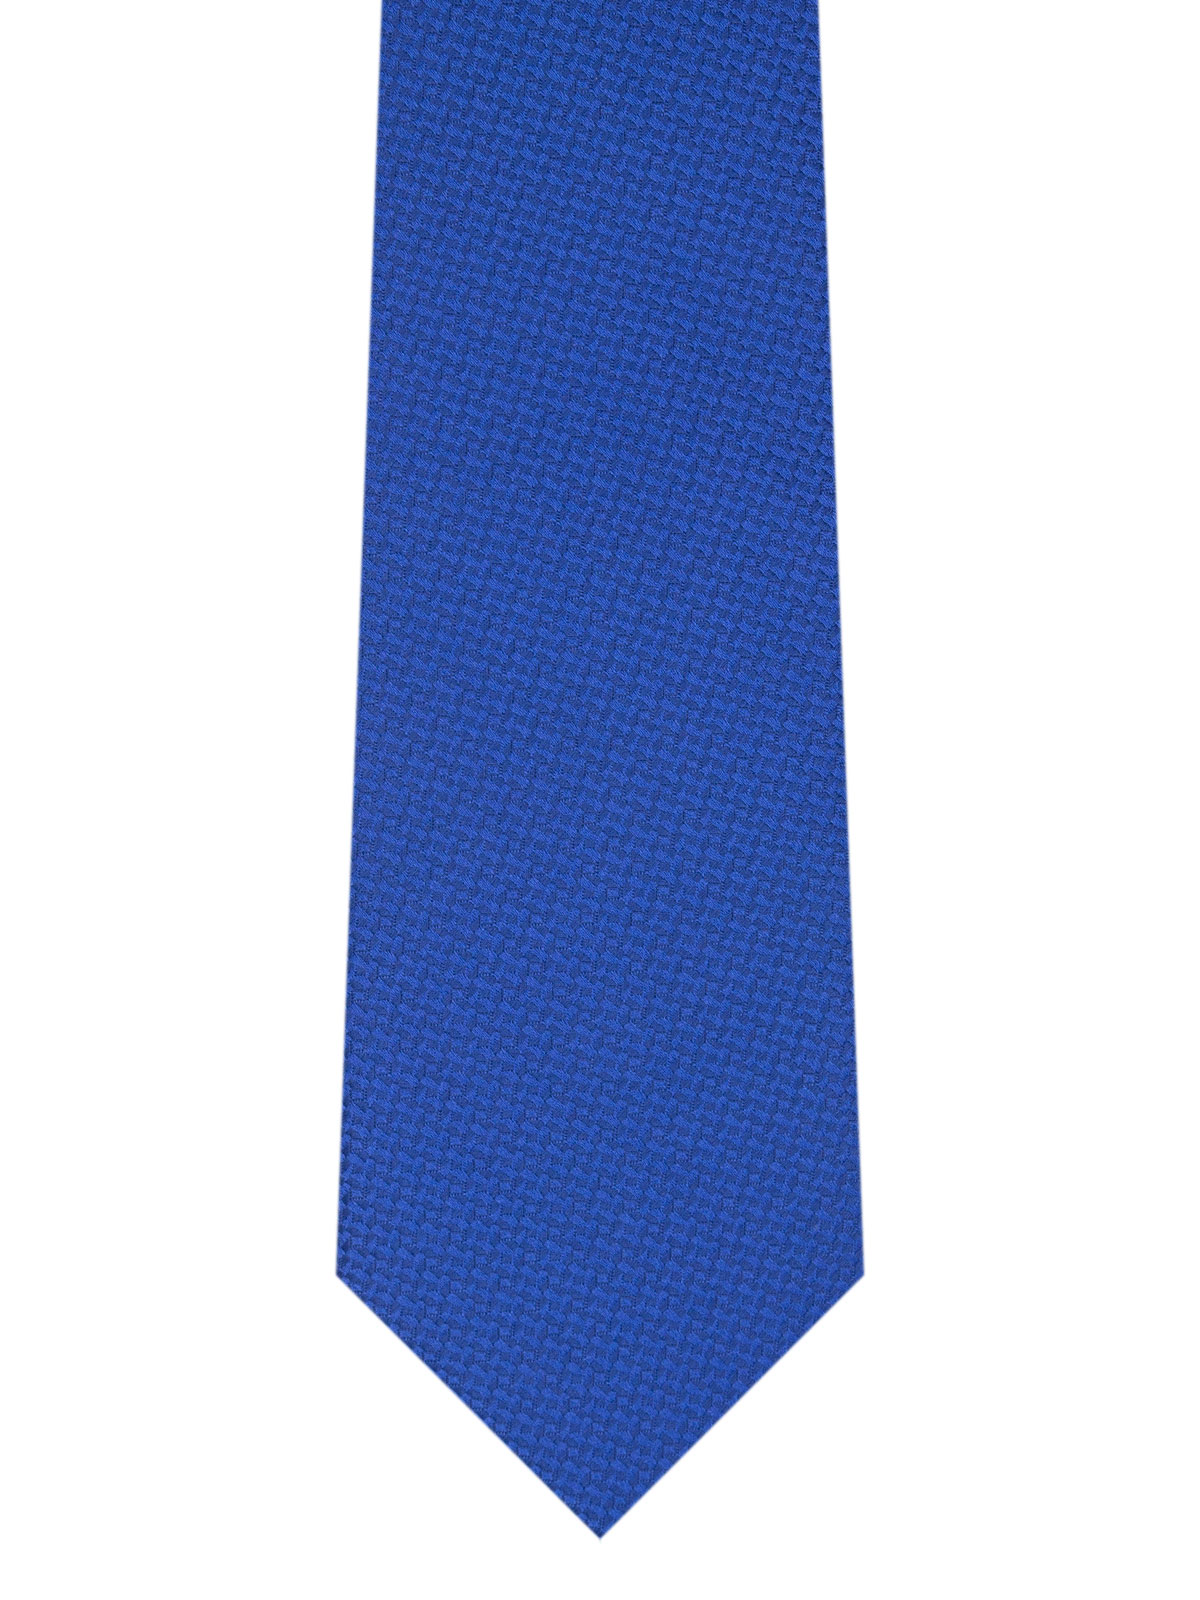 Structured blue tie - 10191 - € 14.06 img2